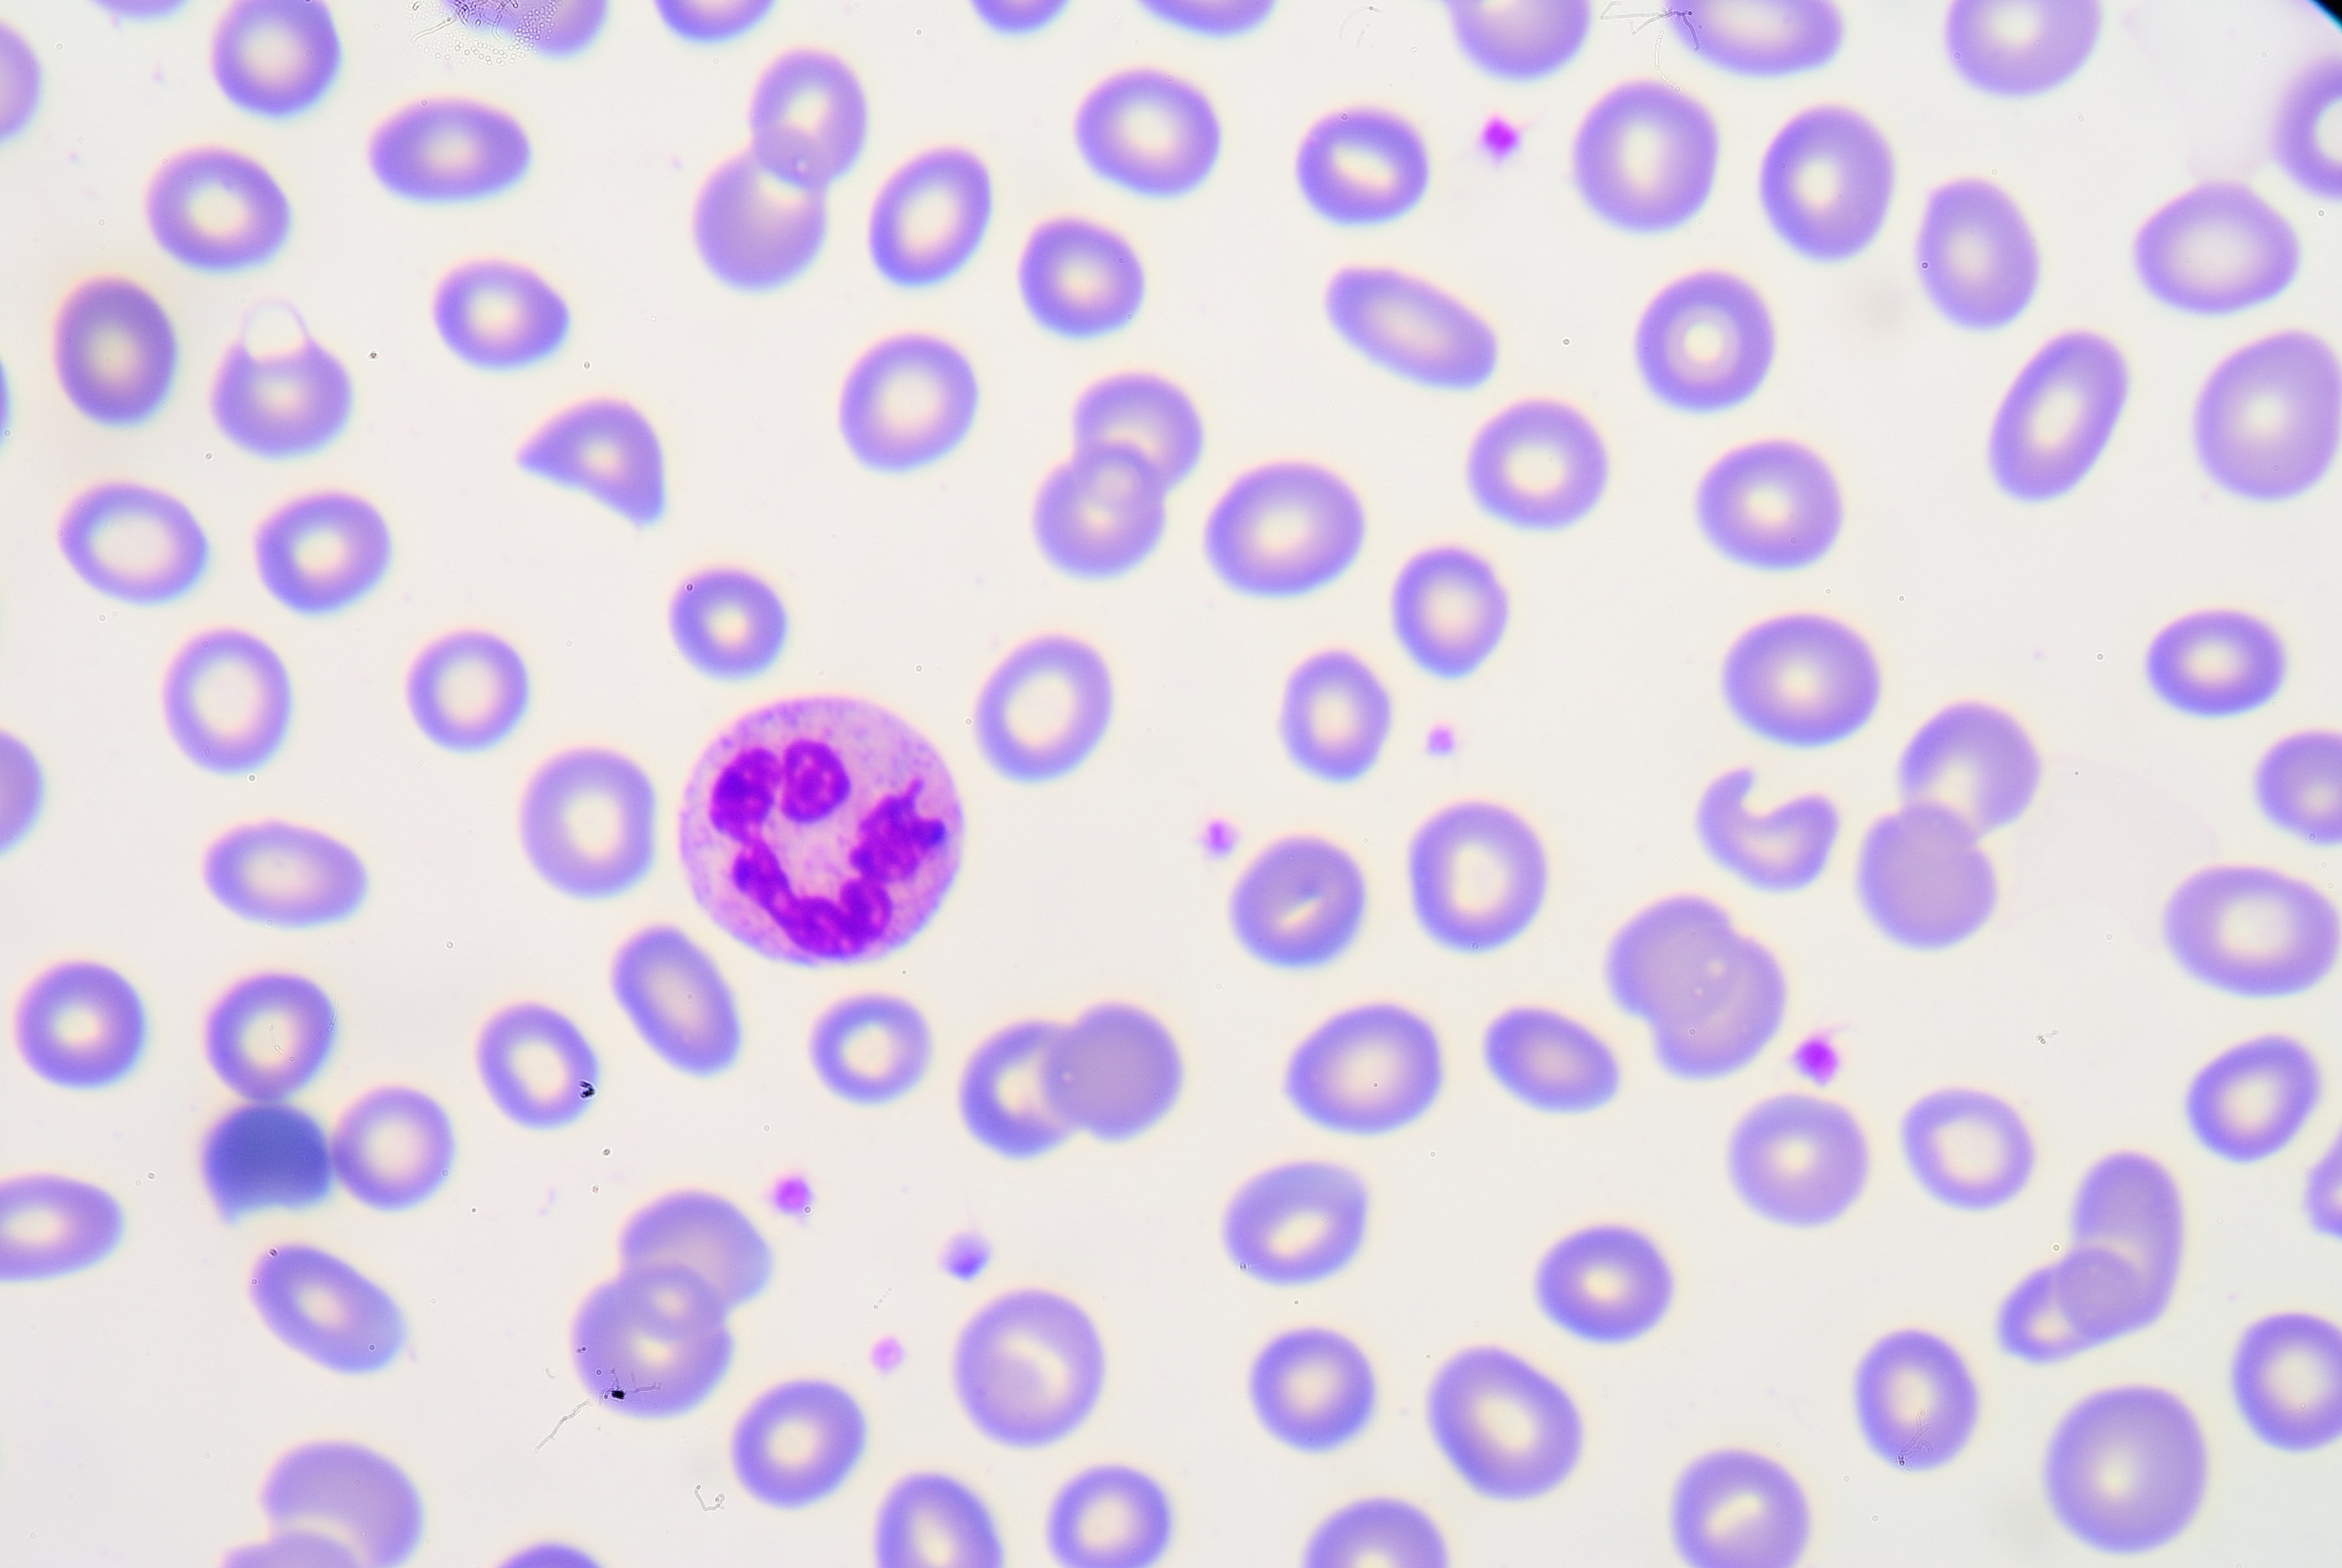 Granulocytes in the blood